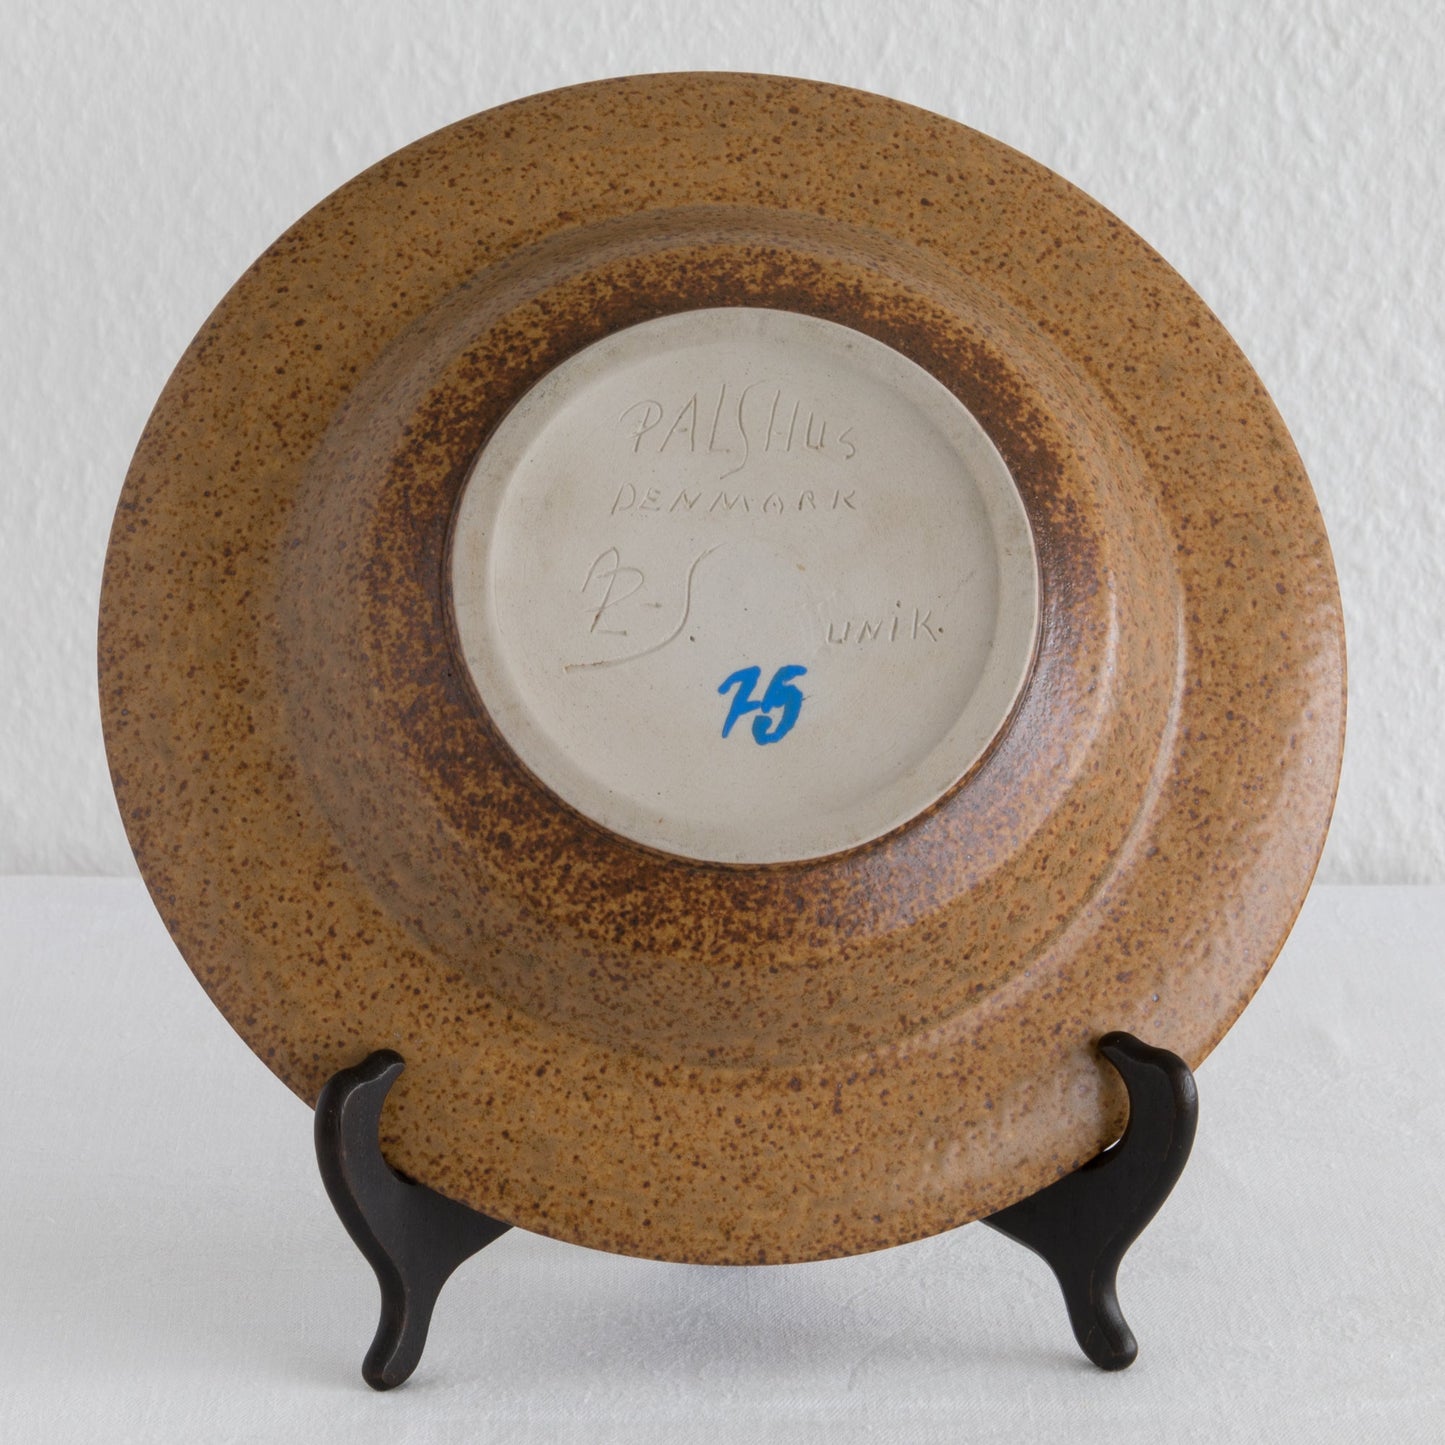 PER LINNEMANN SCHMIDT Palshus Unique Caramel Brown Speckled Glazed Stoneware Bowl Mollaris.com 